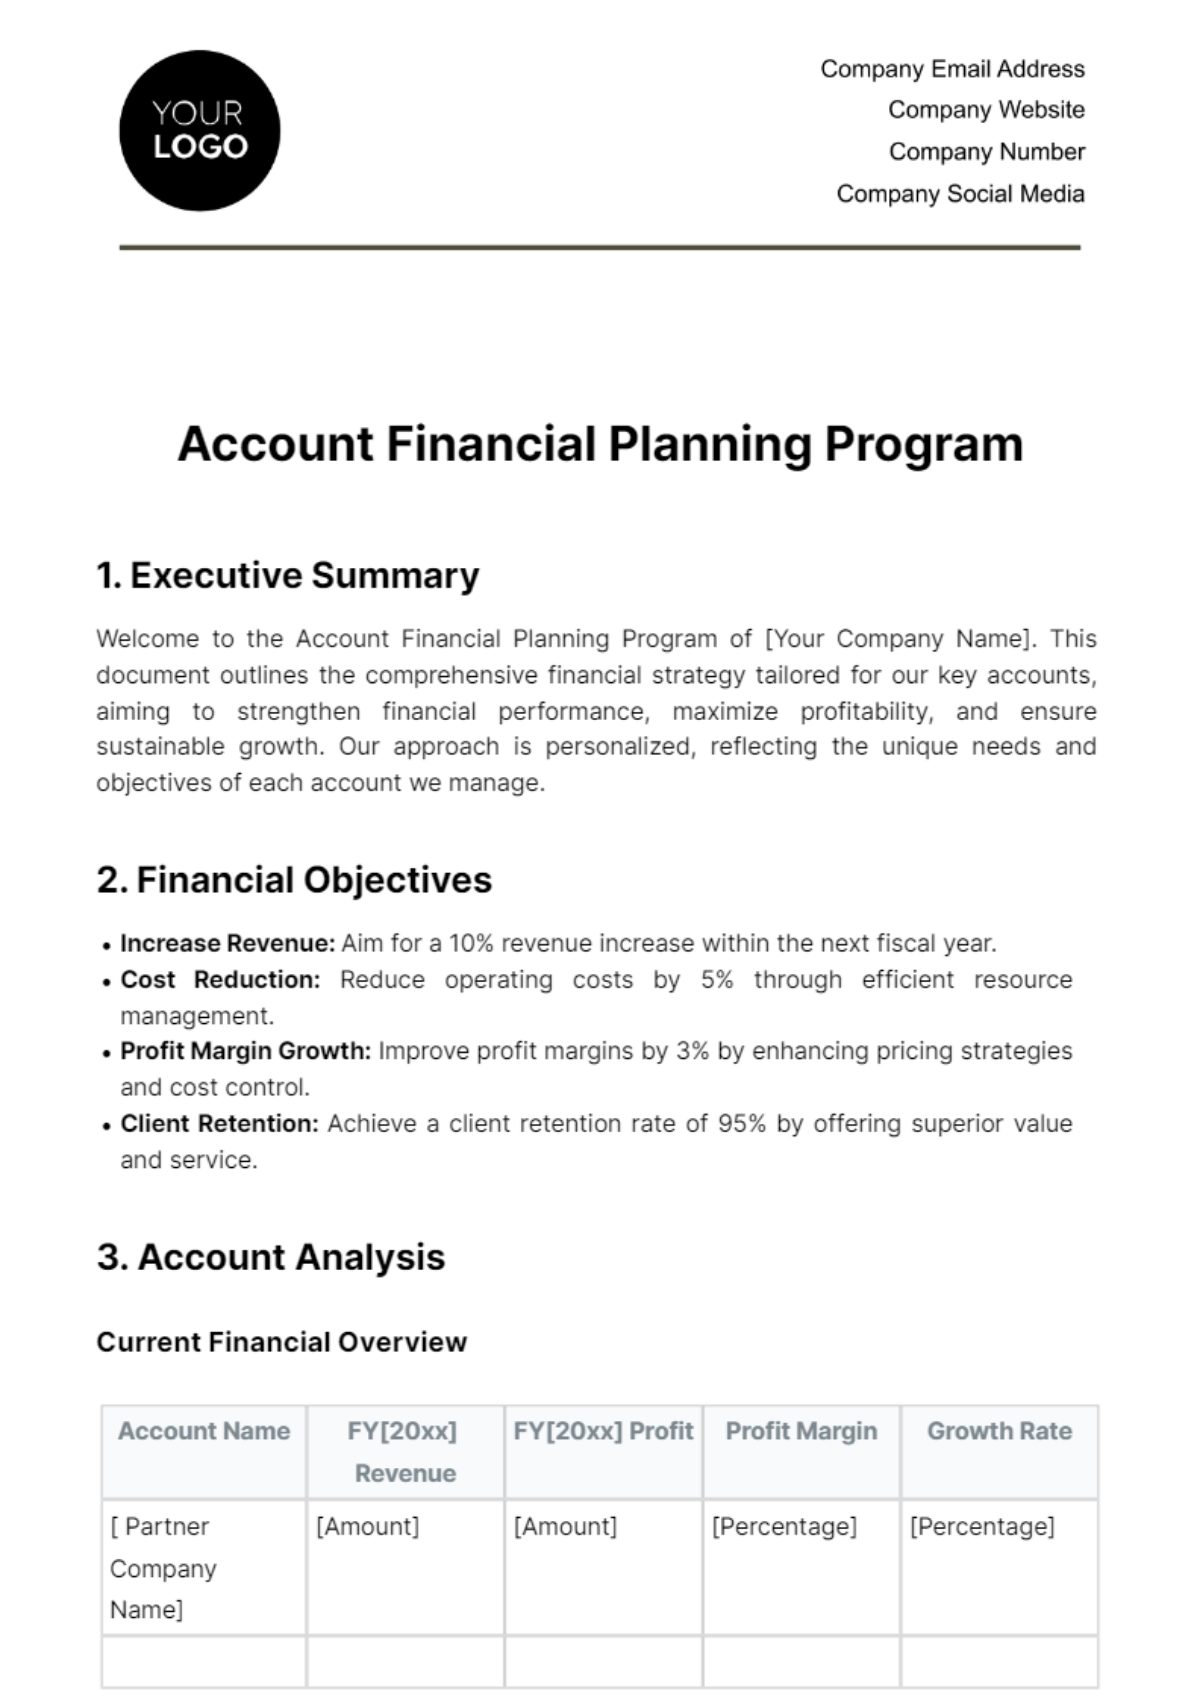 Account Financial Planning Program Template